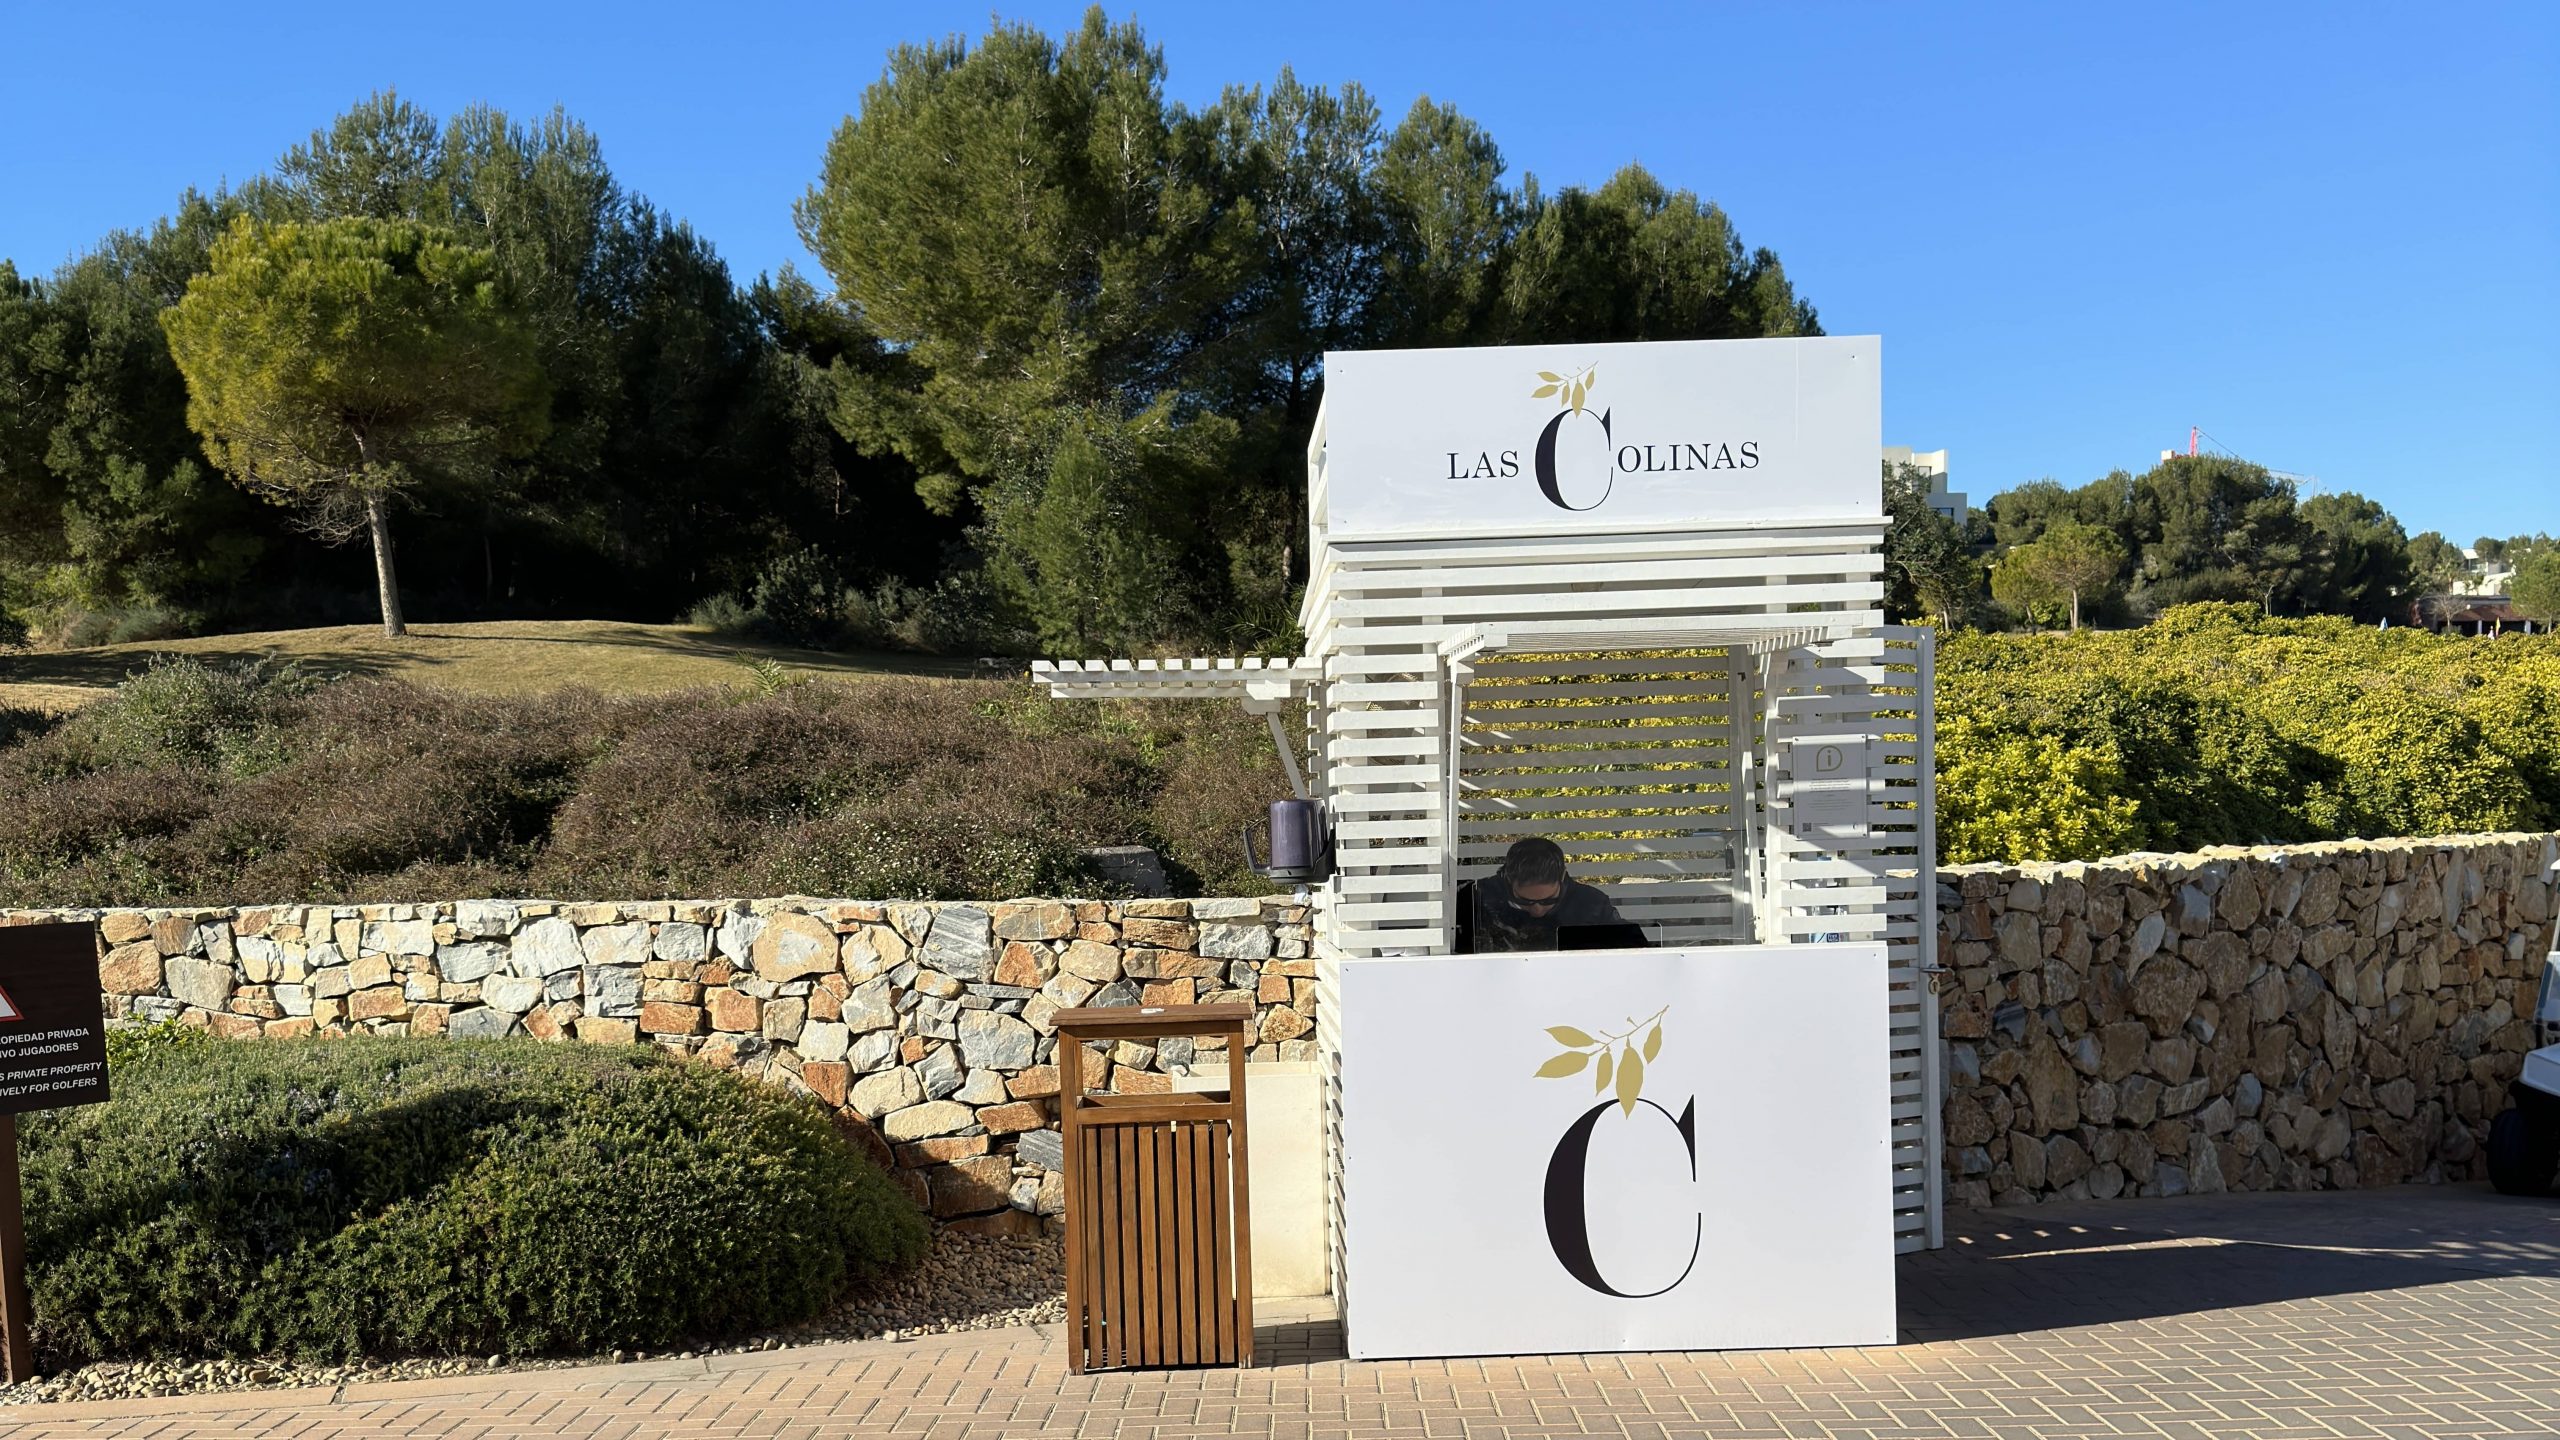 Las Colinas Golf & Country Club (Alicante) – Course Review